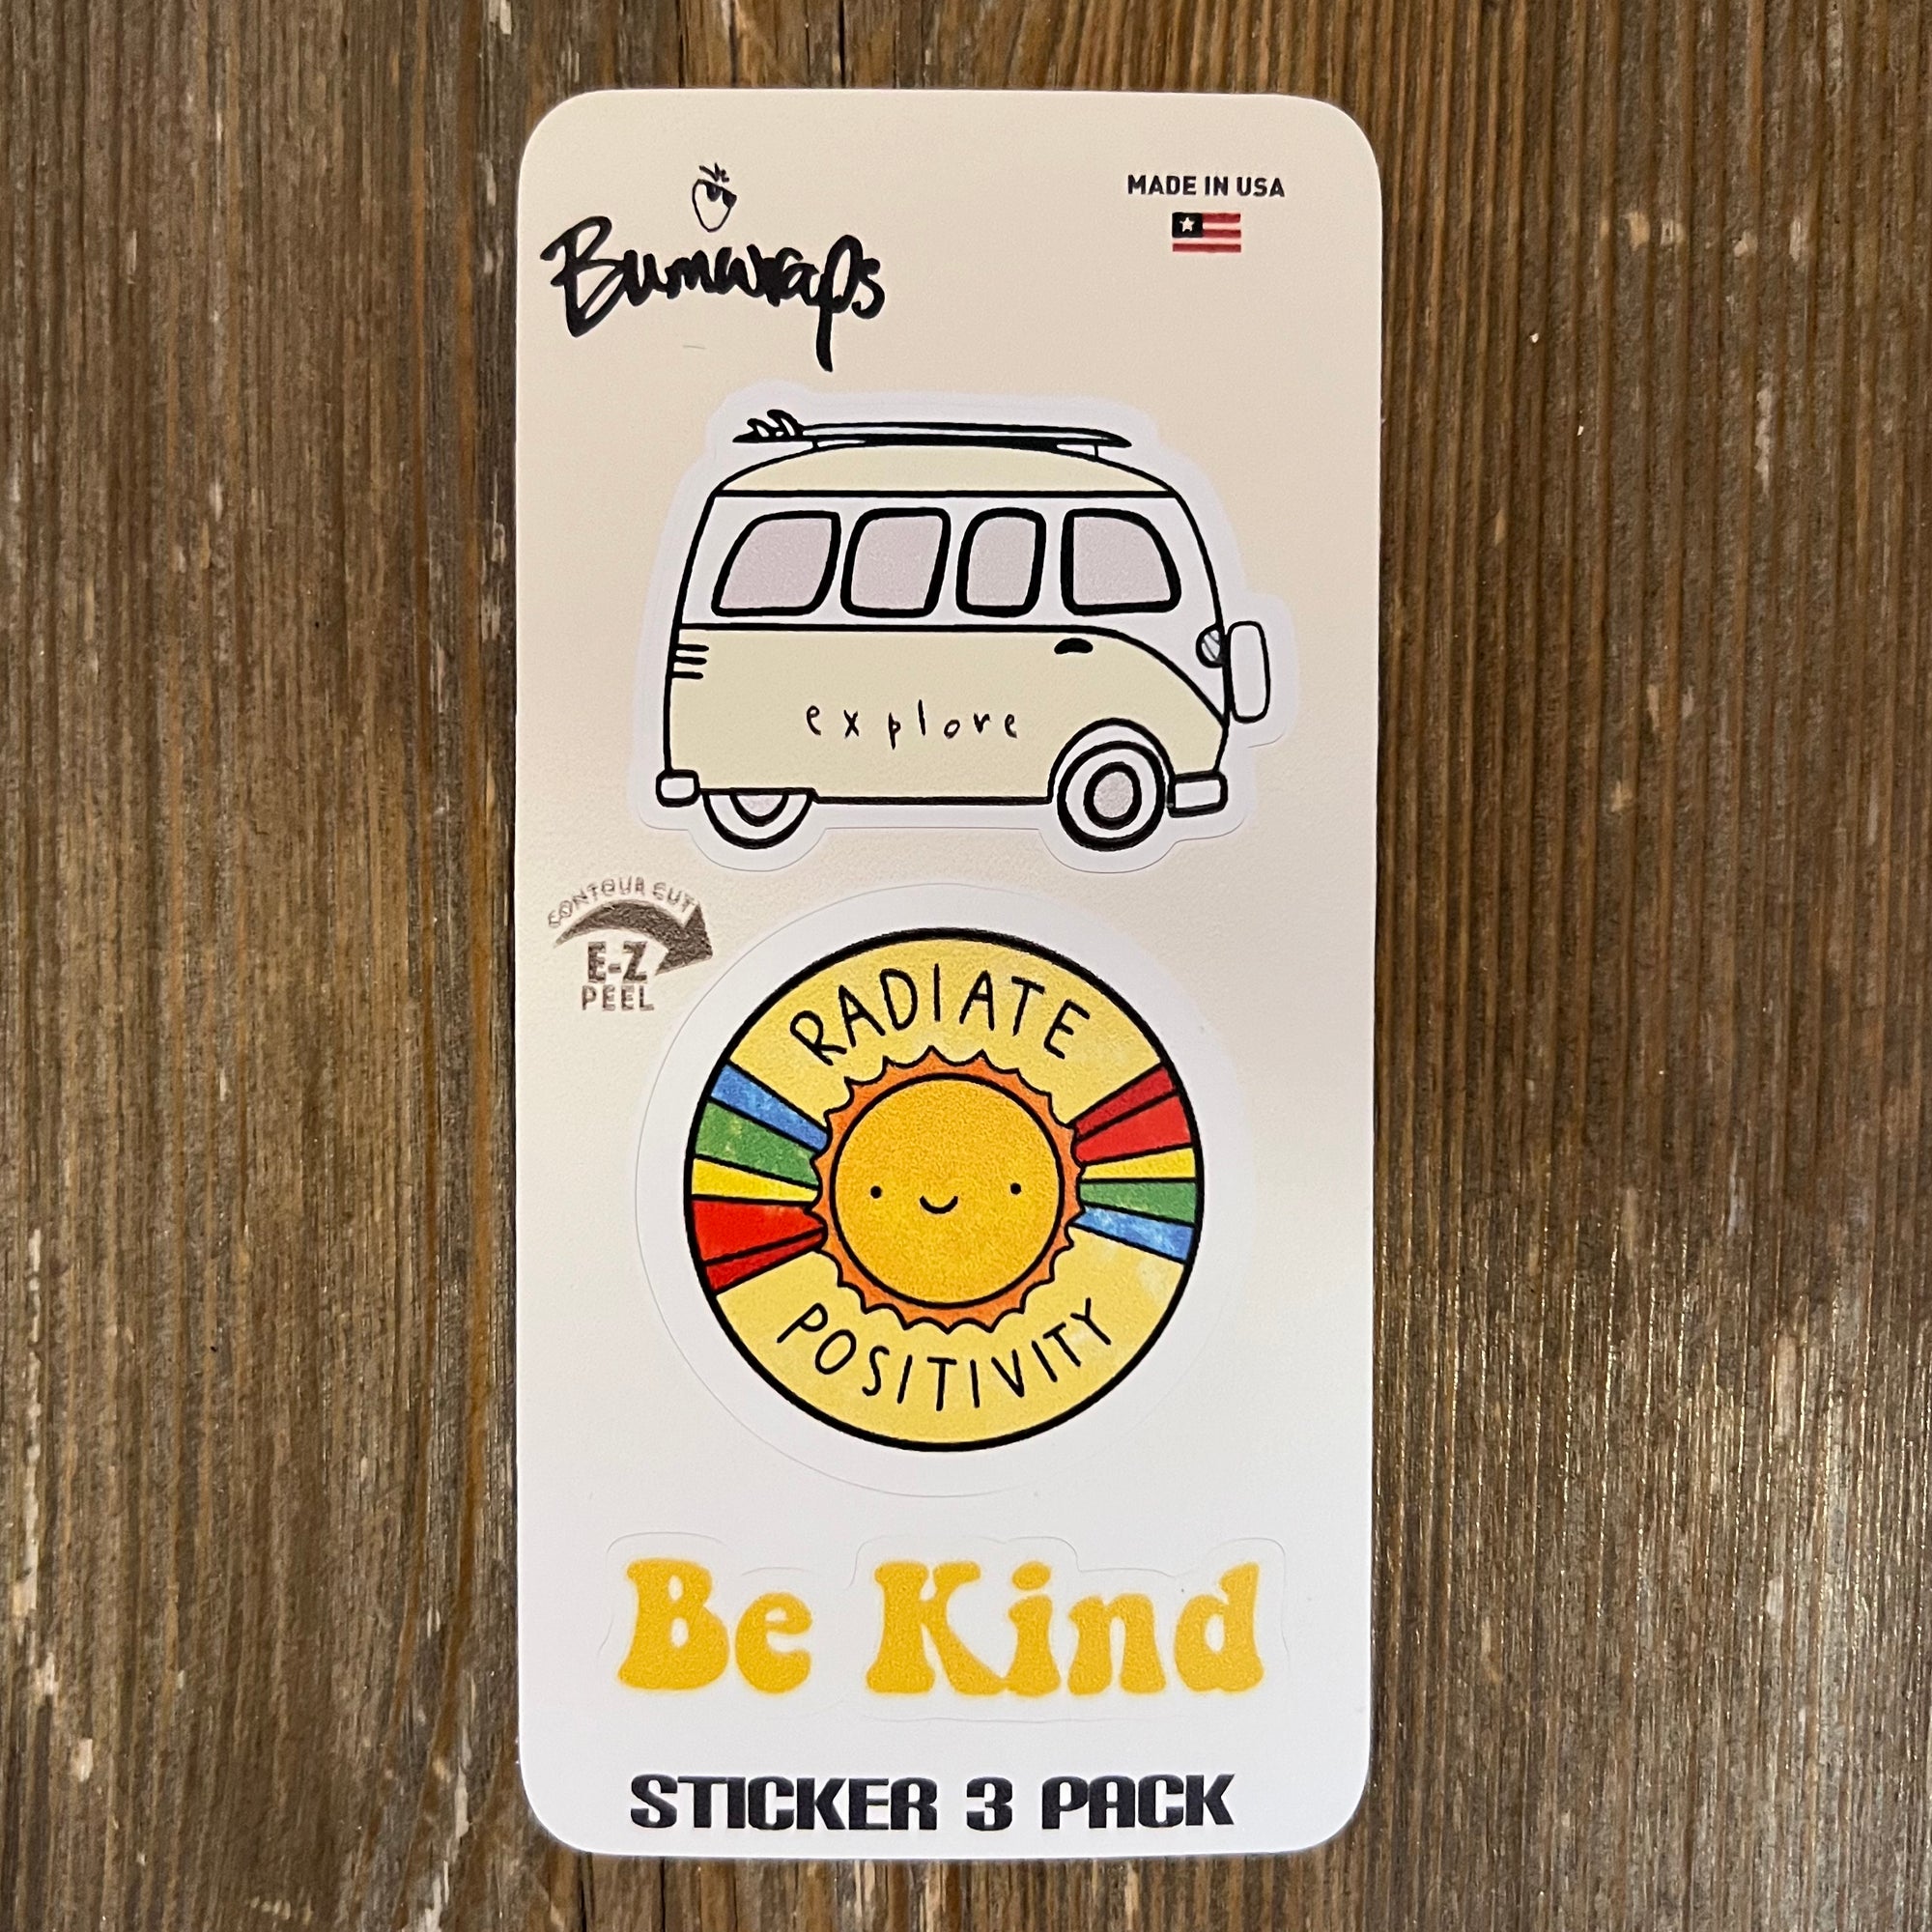 Radiate Sticker 3 Pack